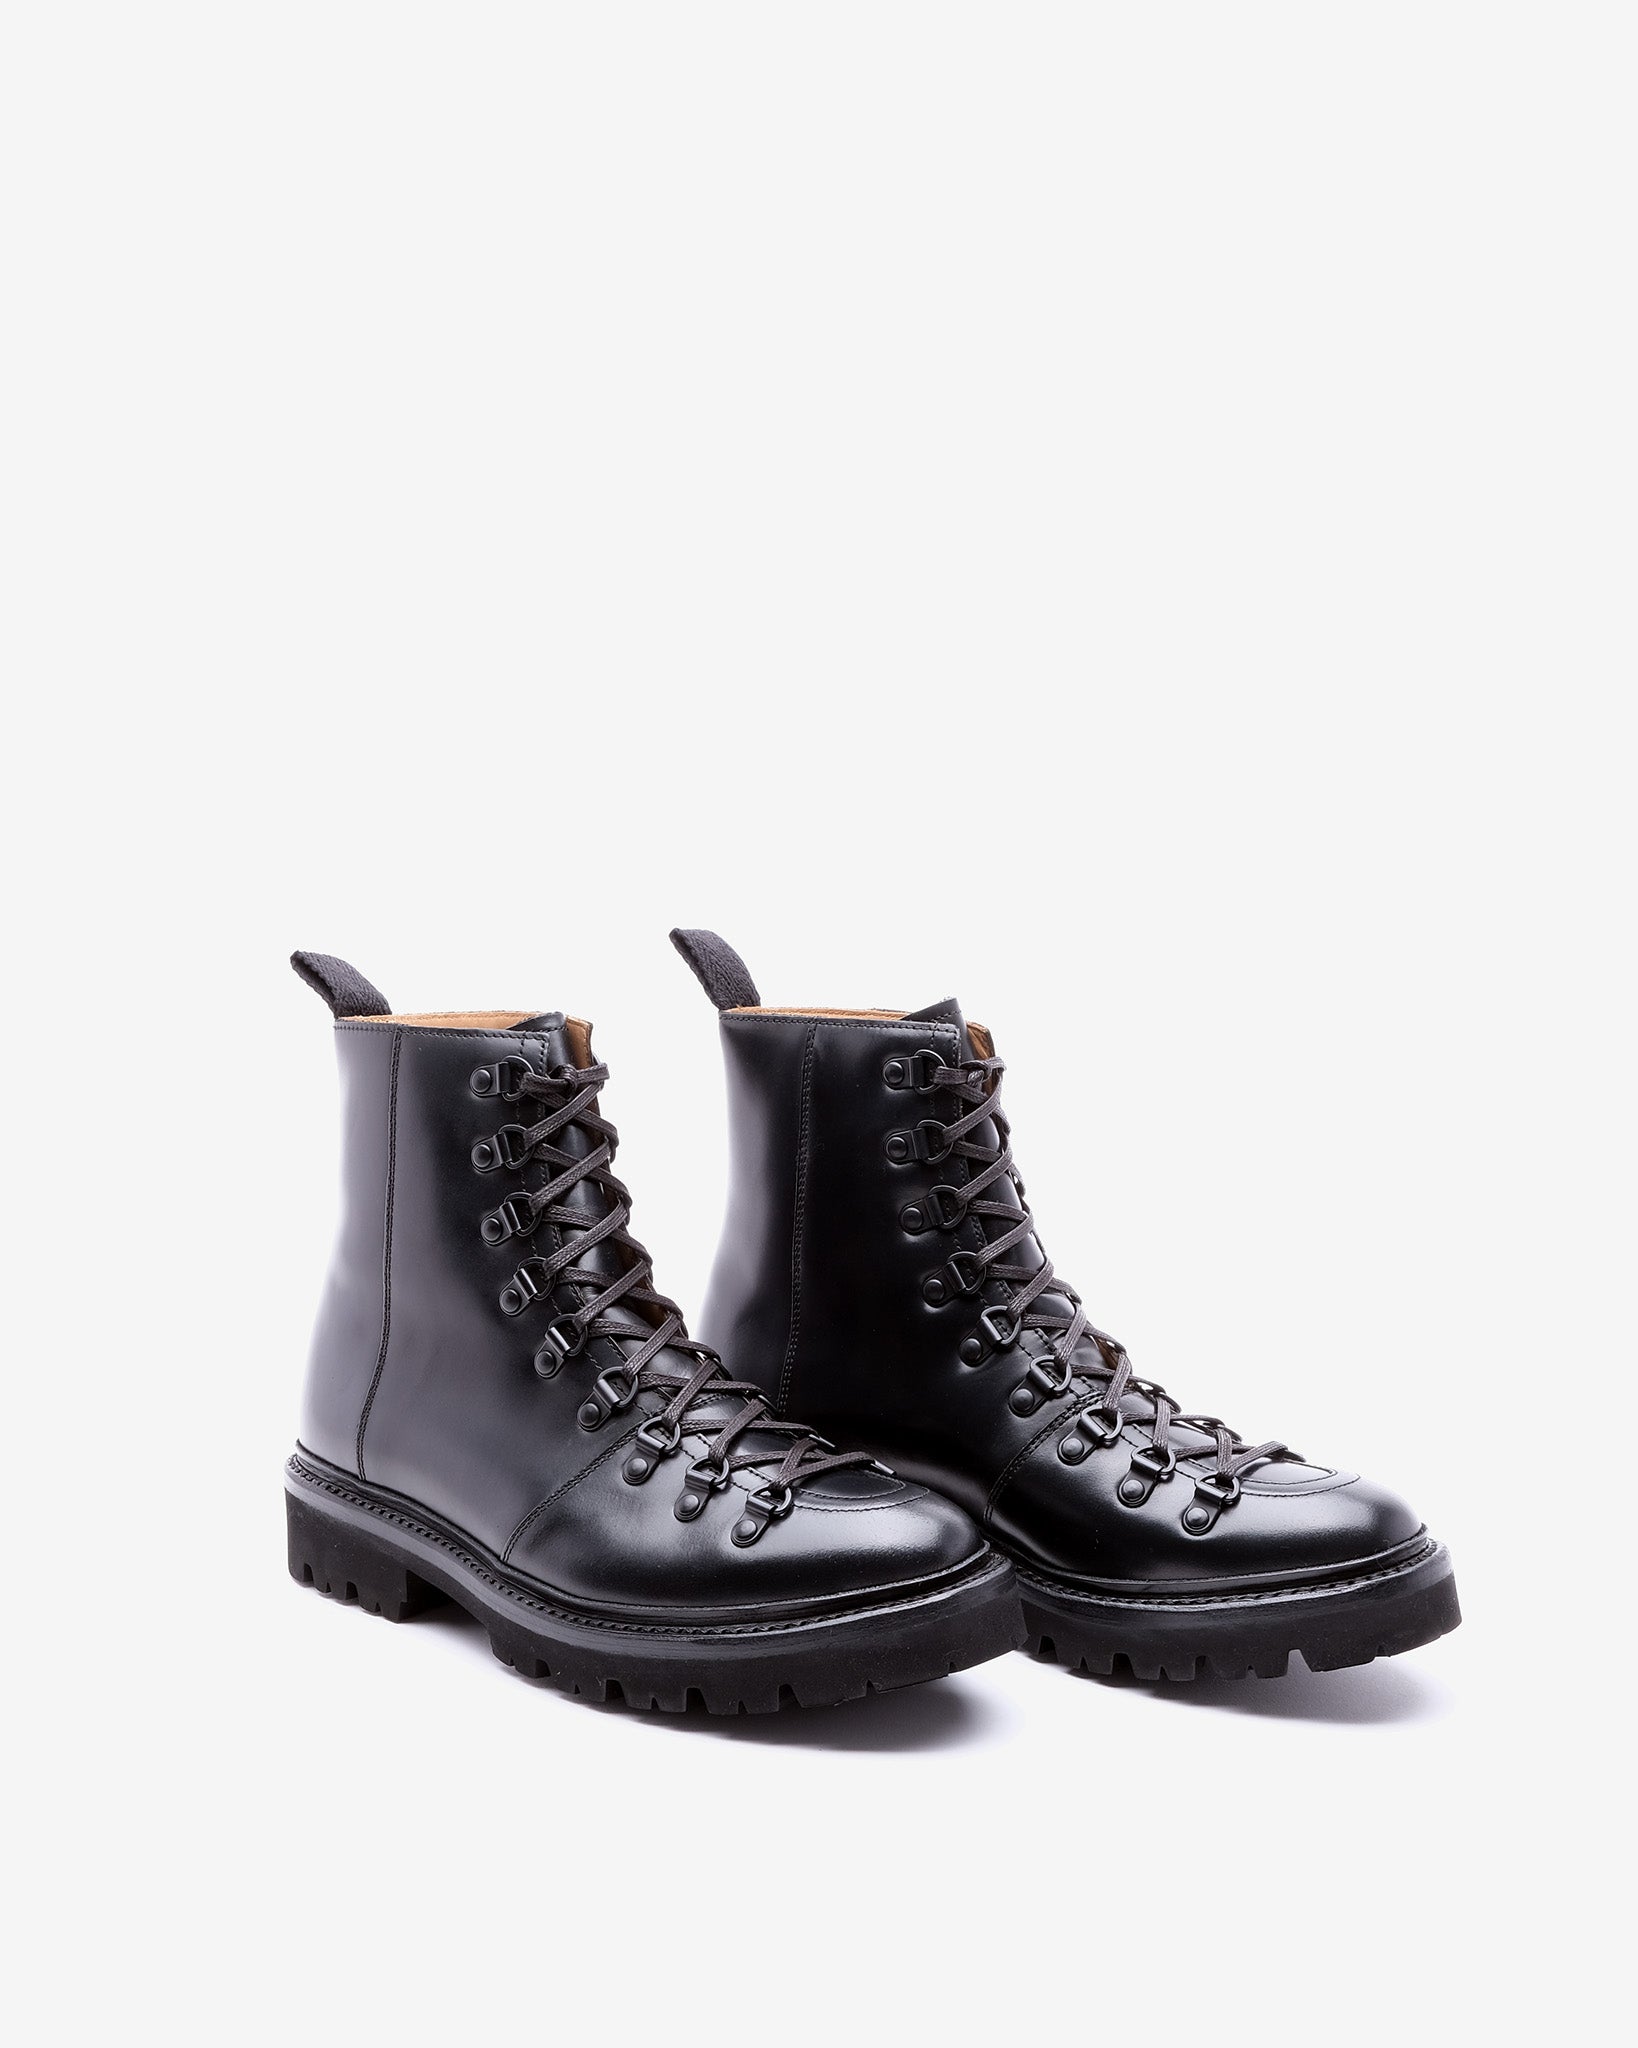 Nanette Black Colorado Leather Boots